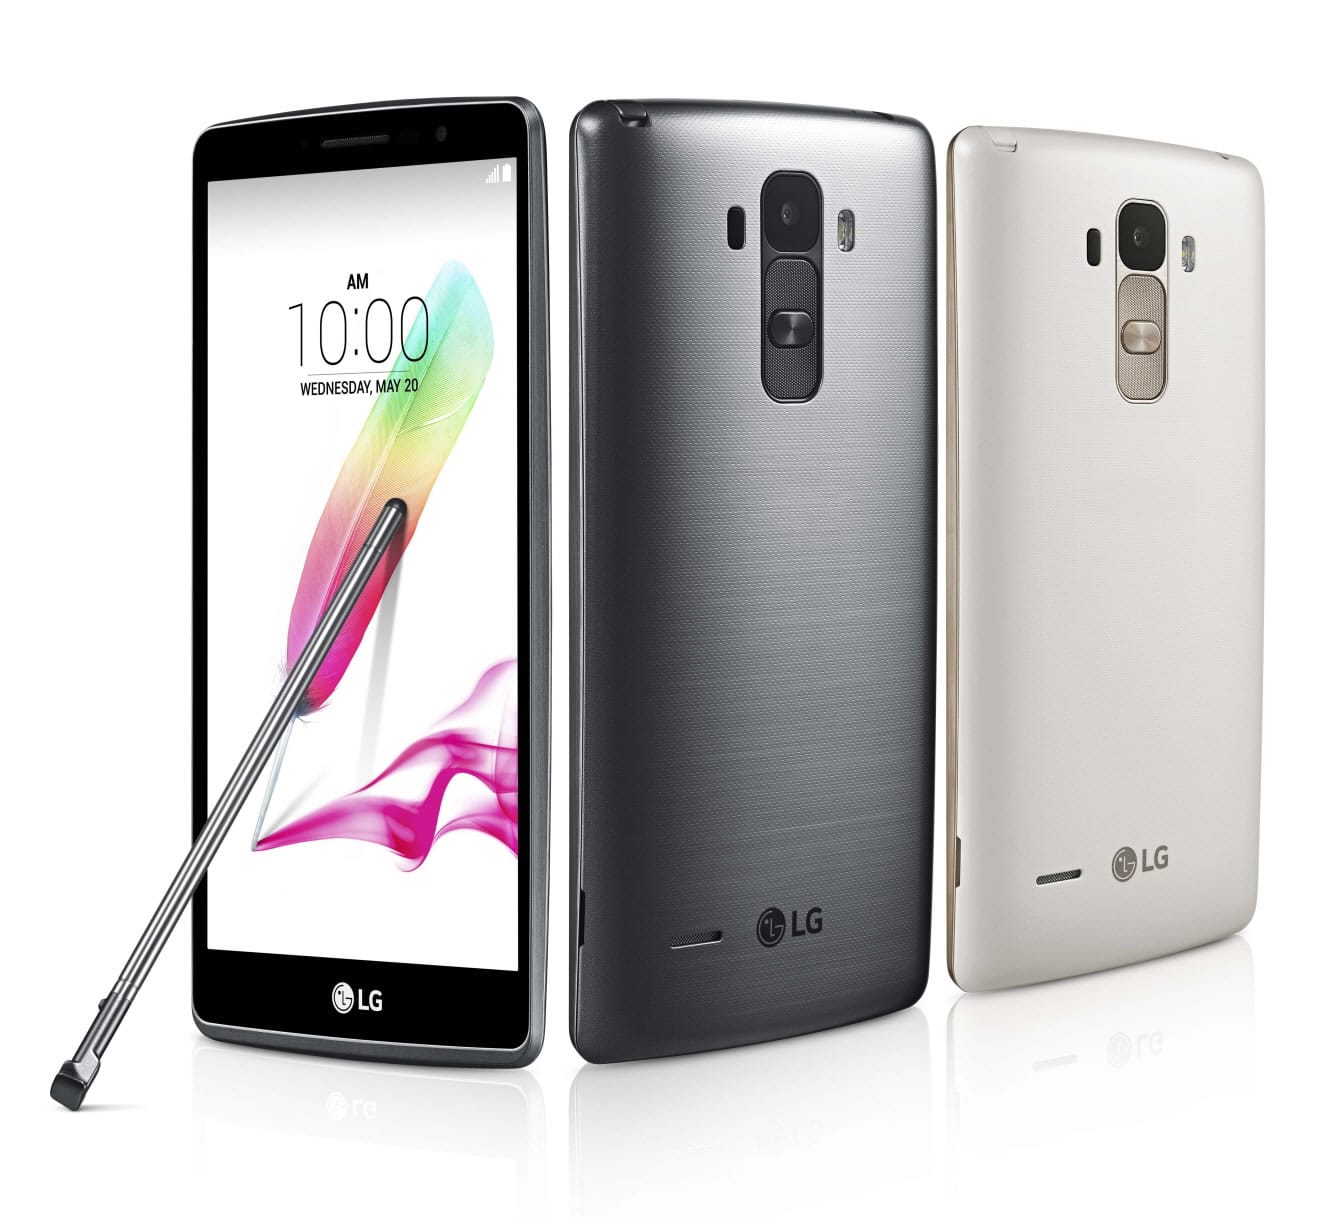 LG G4 Stylus sería un dispositivo de gama media